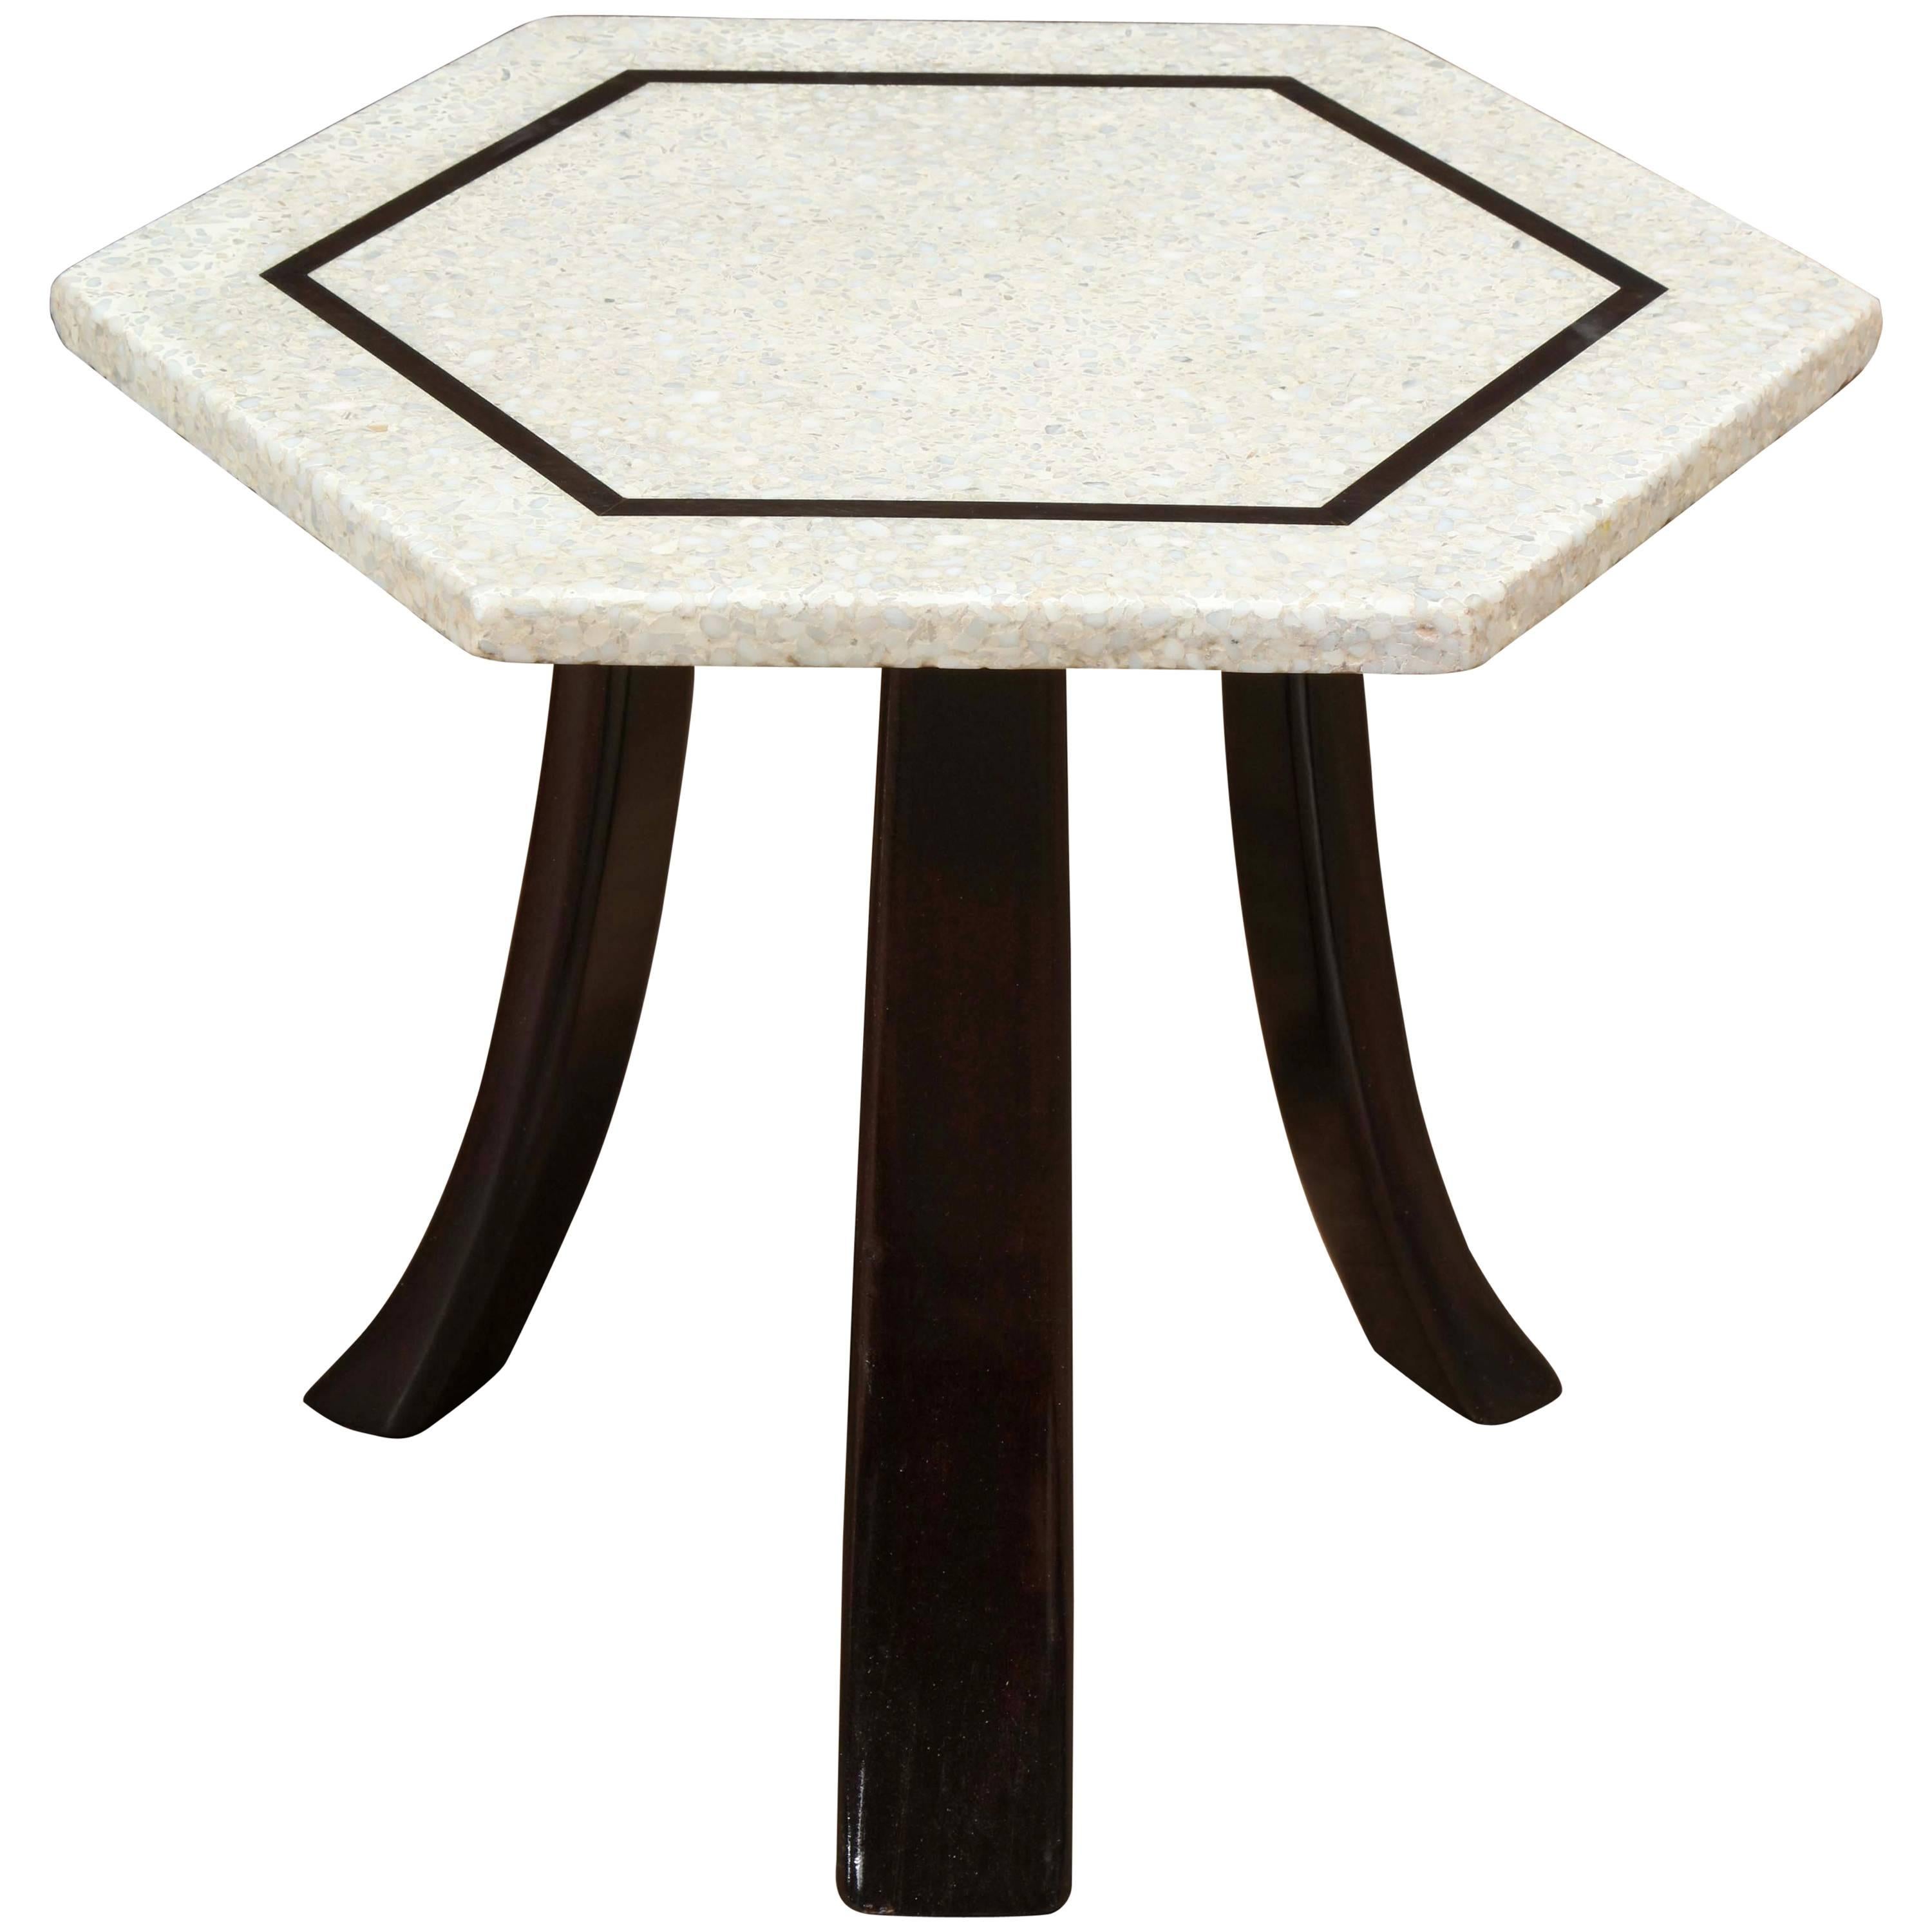 Probber Hexagonal Table